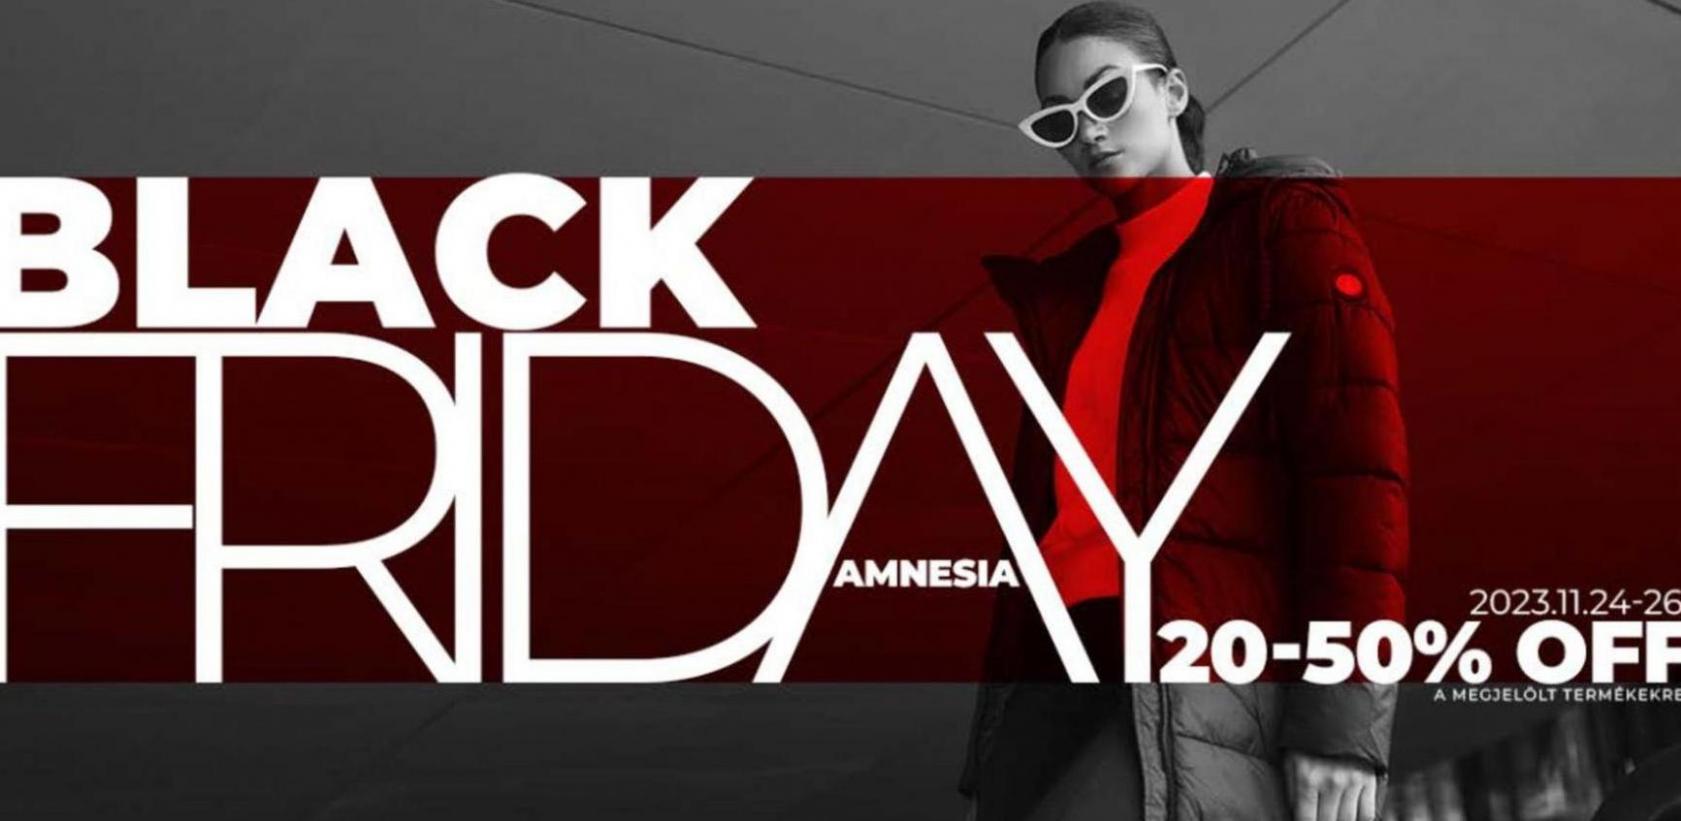 Amnesia Black Friday. Amnesia (2023-11-26-2023-11-26)